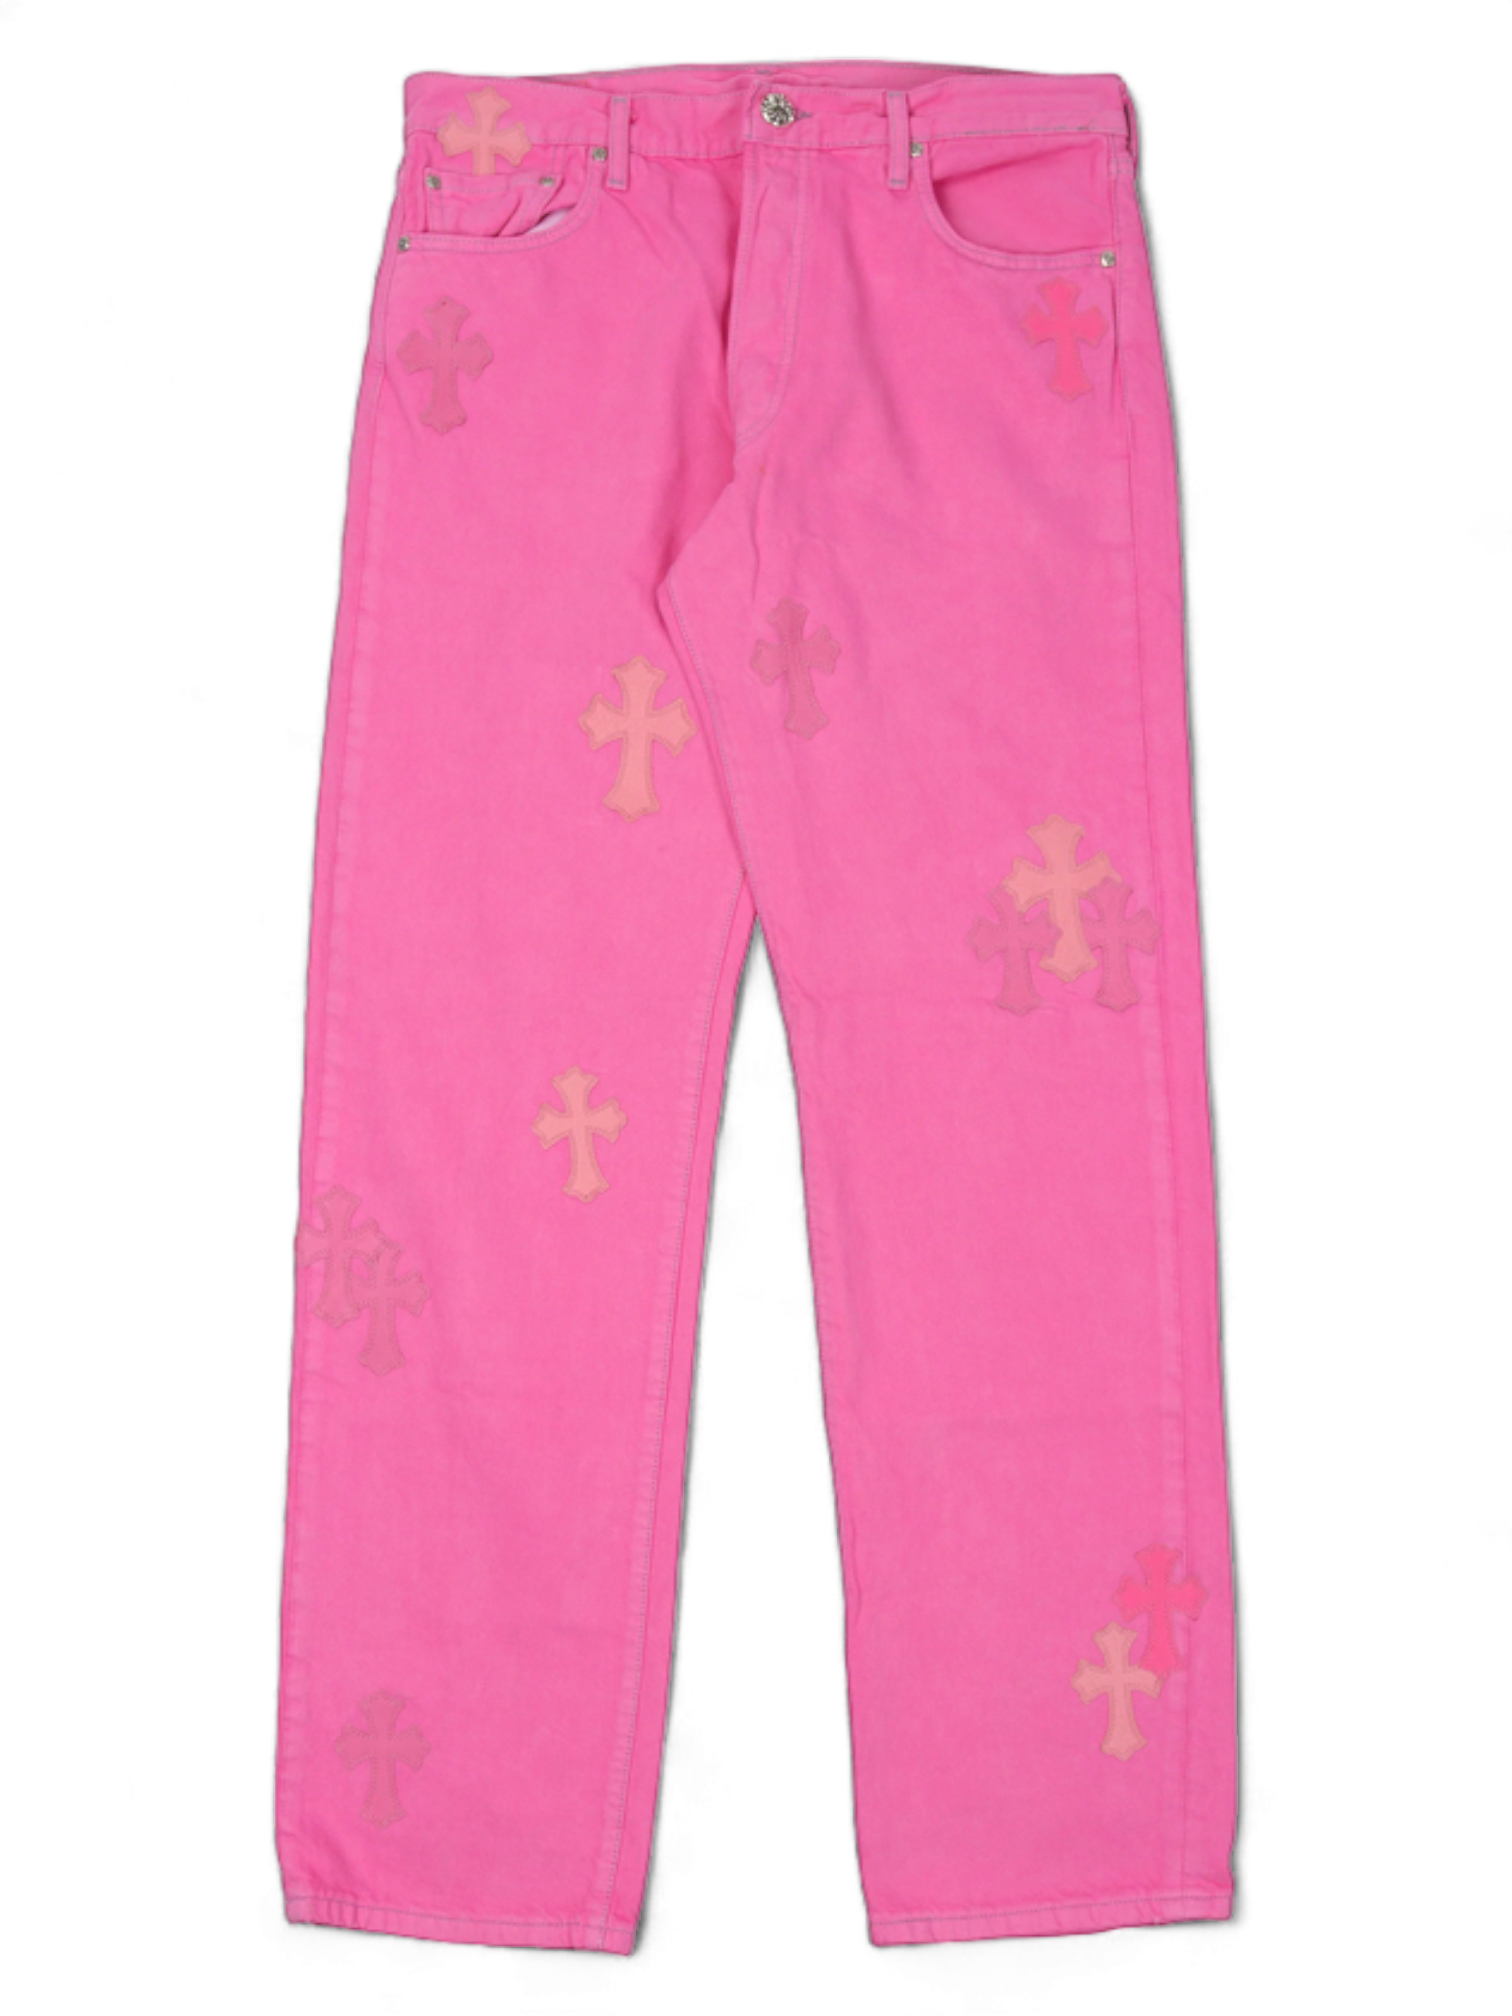 Chrome Hearts Pink Cross Patch Levi’s Denim Jeans